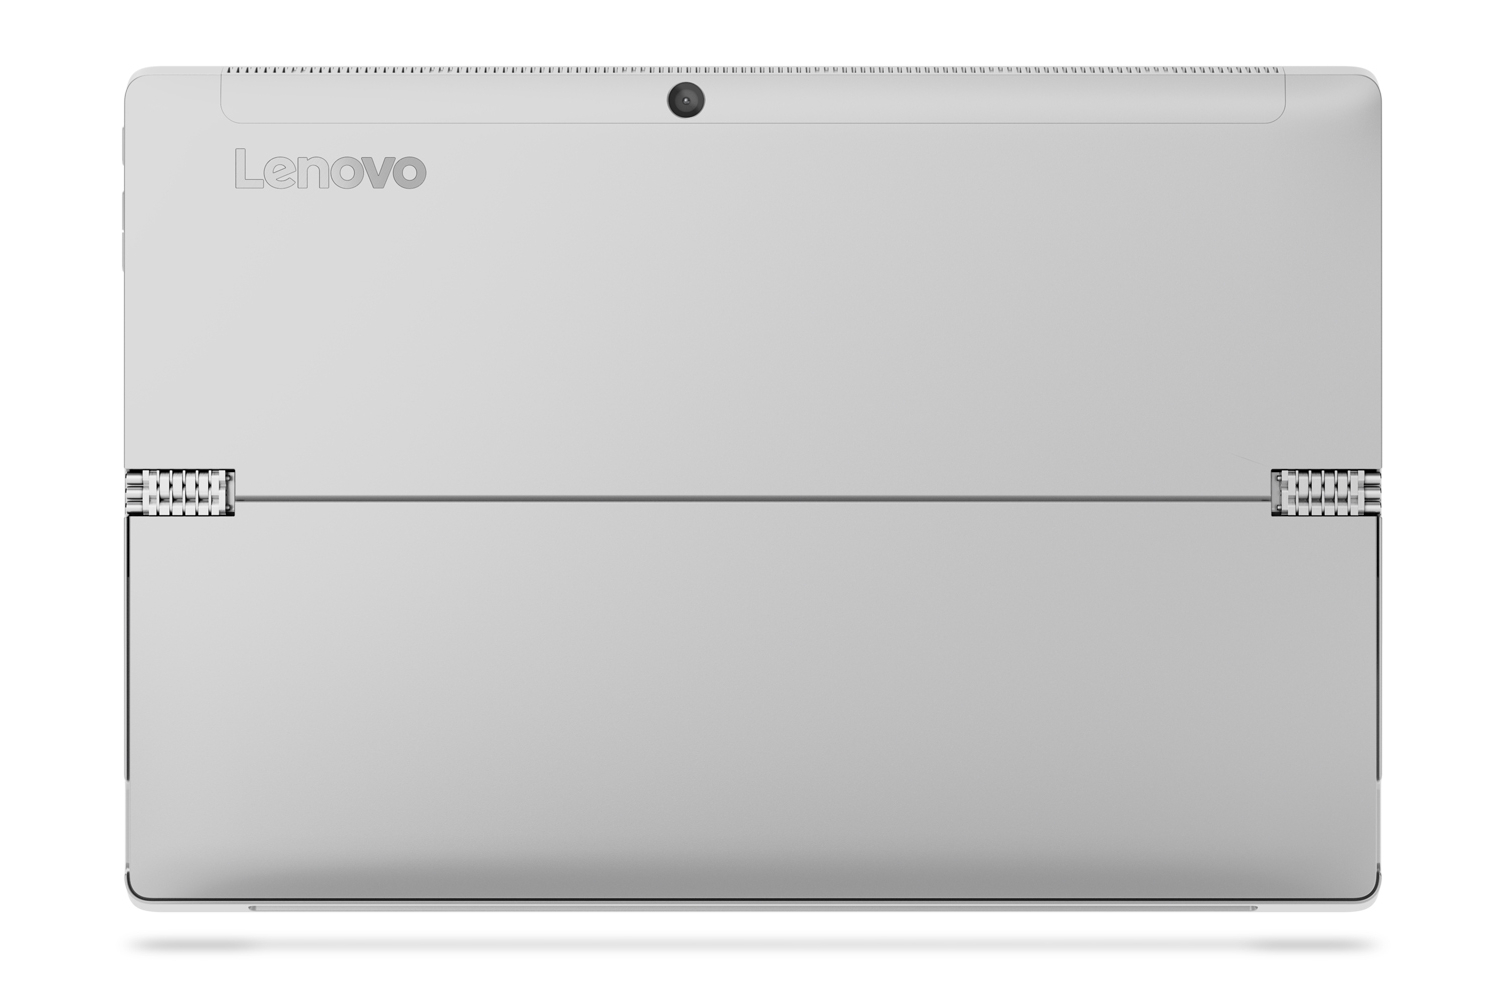 Lenovo Miix 520